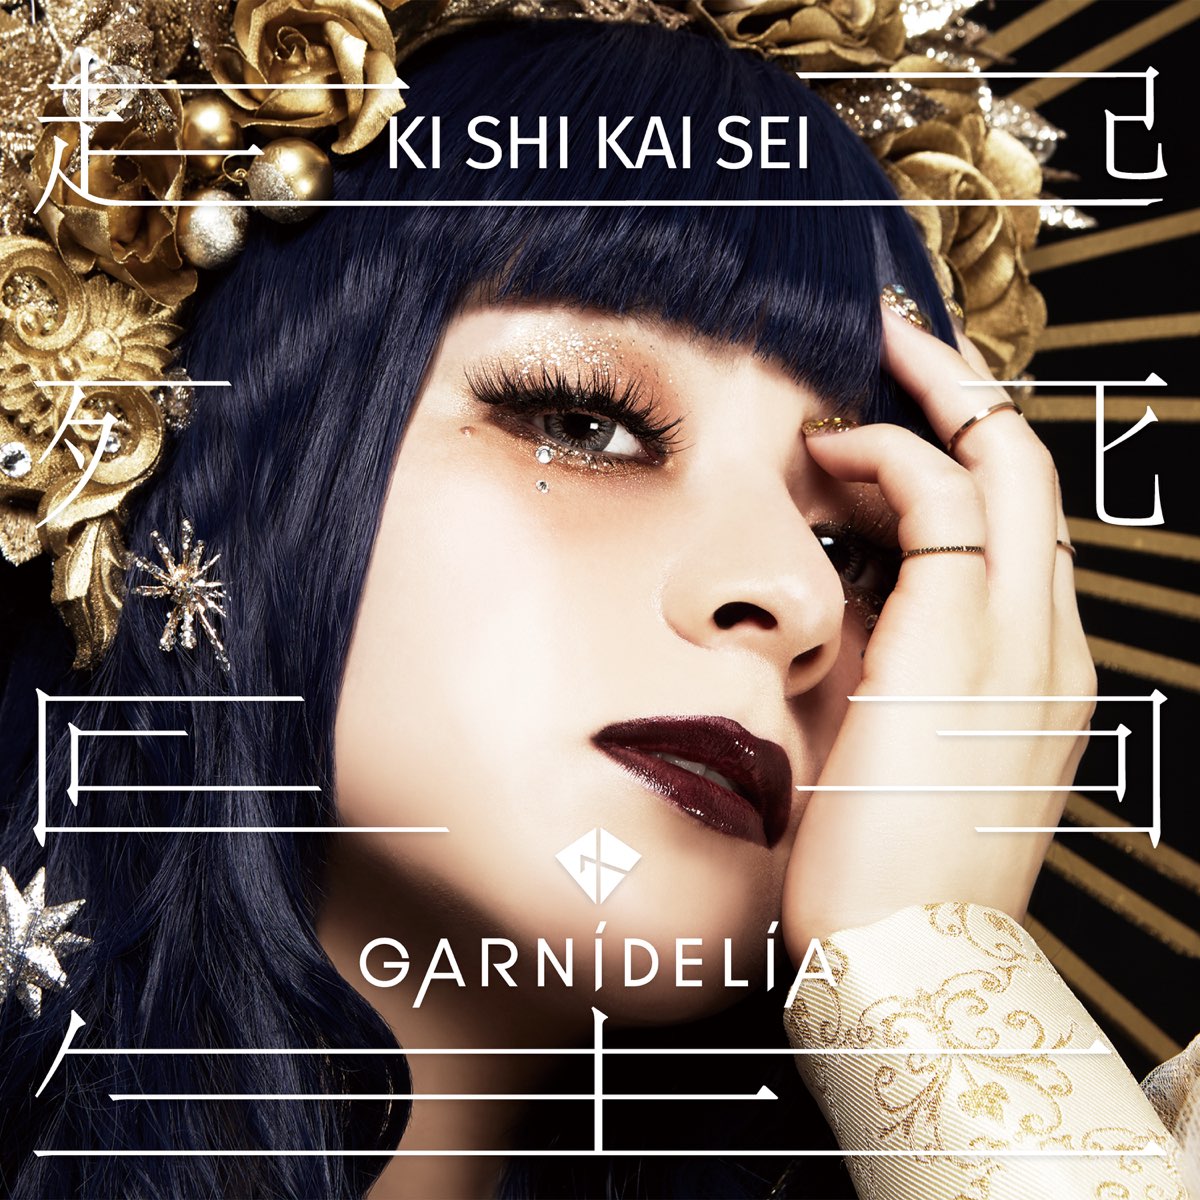 Cover for『GARNiDELiA - Kishikaisei』from the release『Kishikaisei』